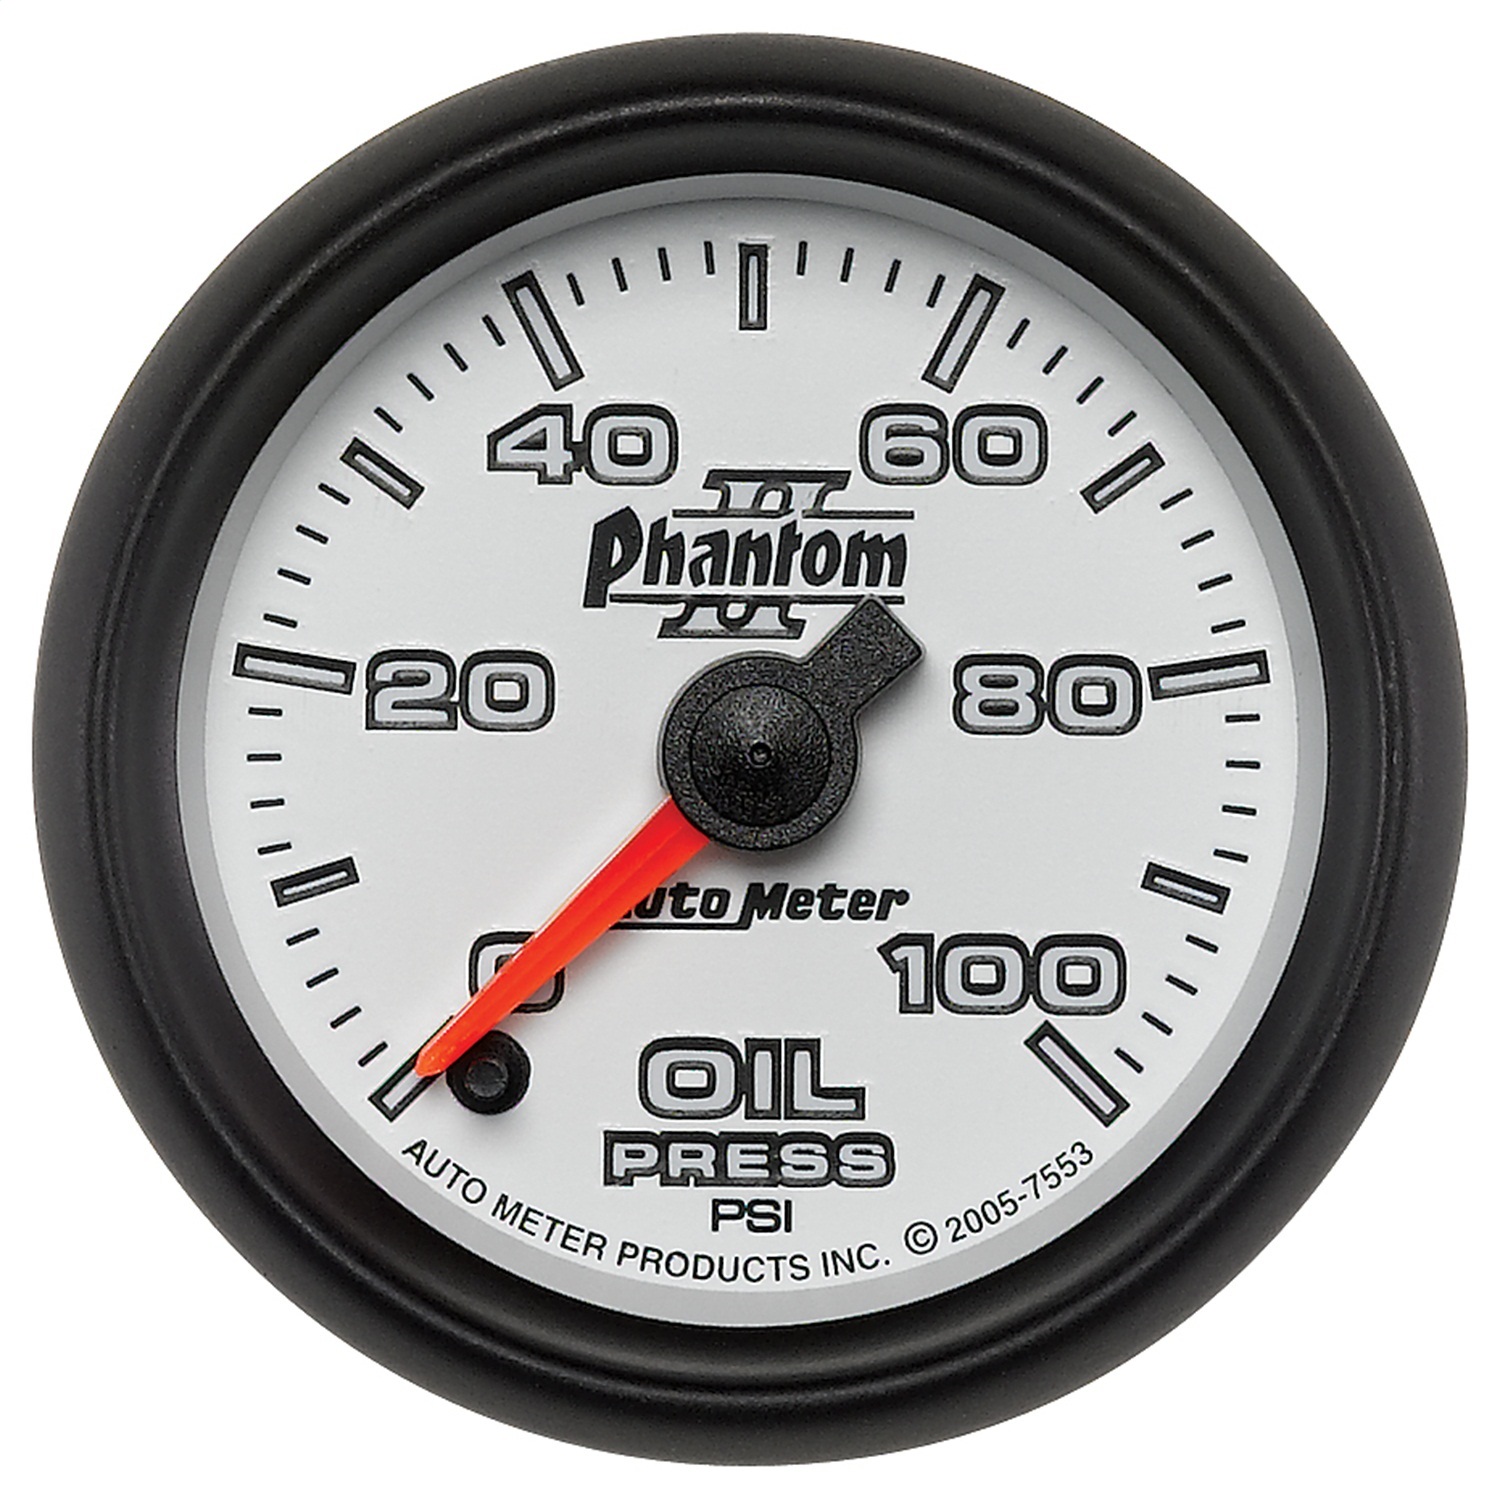 Auto Meter Auto Meter 7553 Phantom II; Electric Oil Pressure Gauge